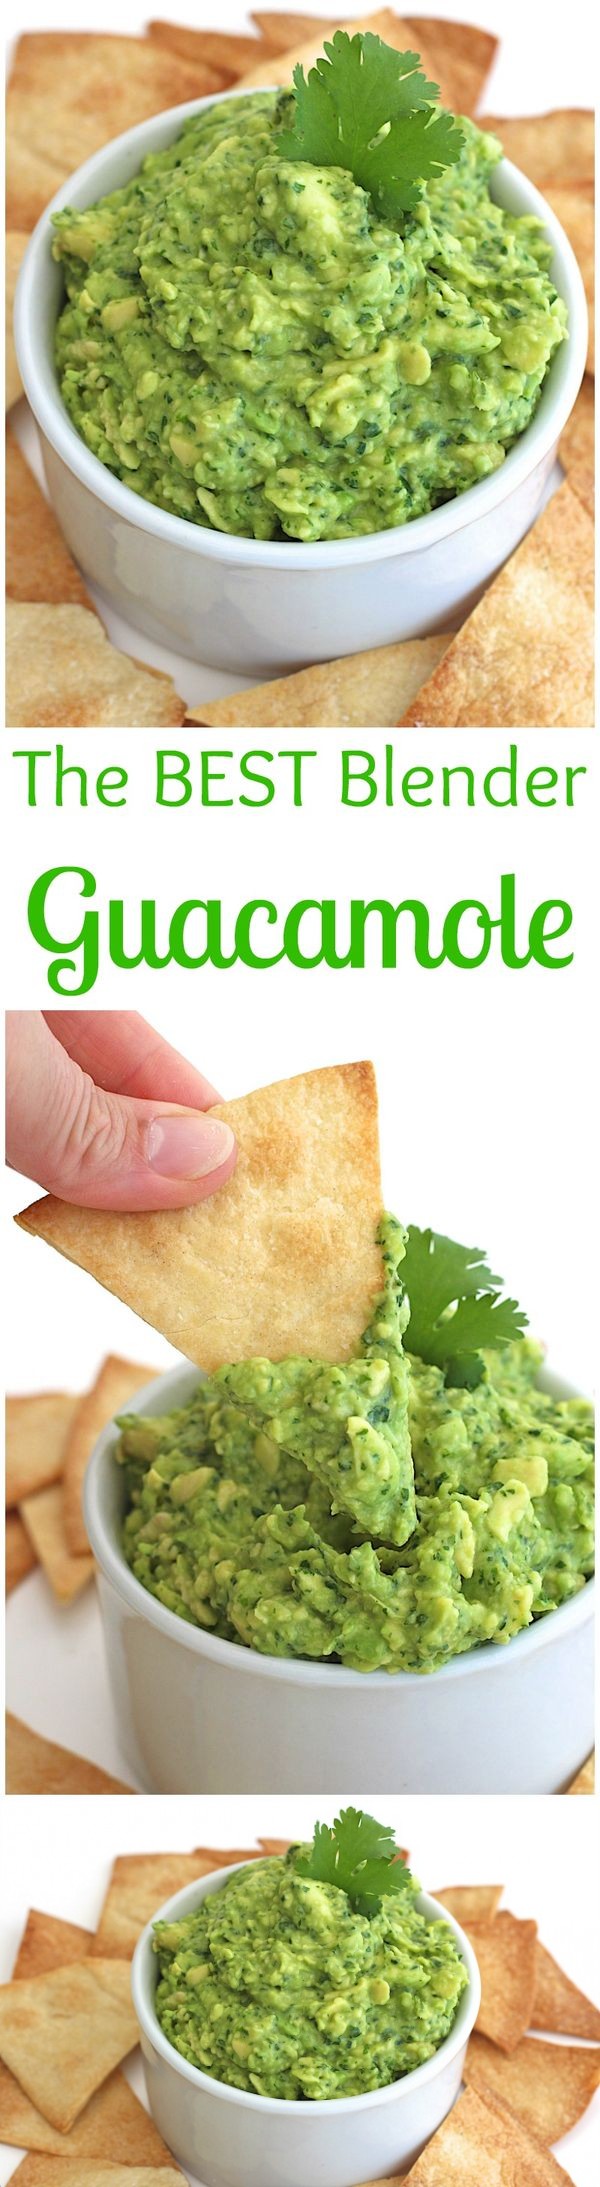 The Best Blender Guacamole